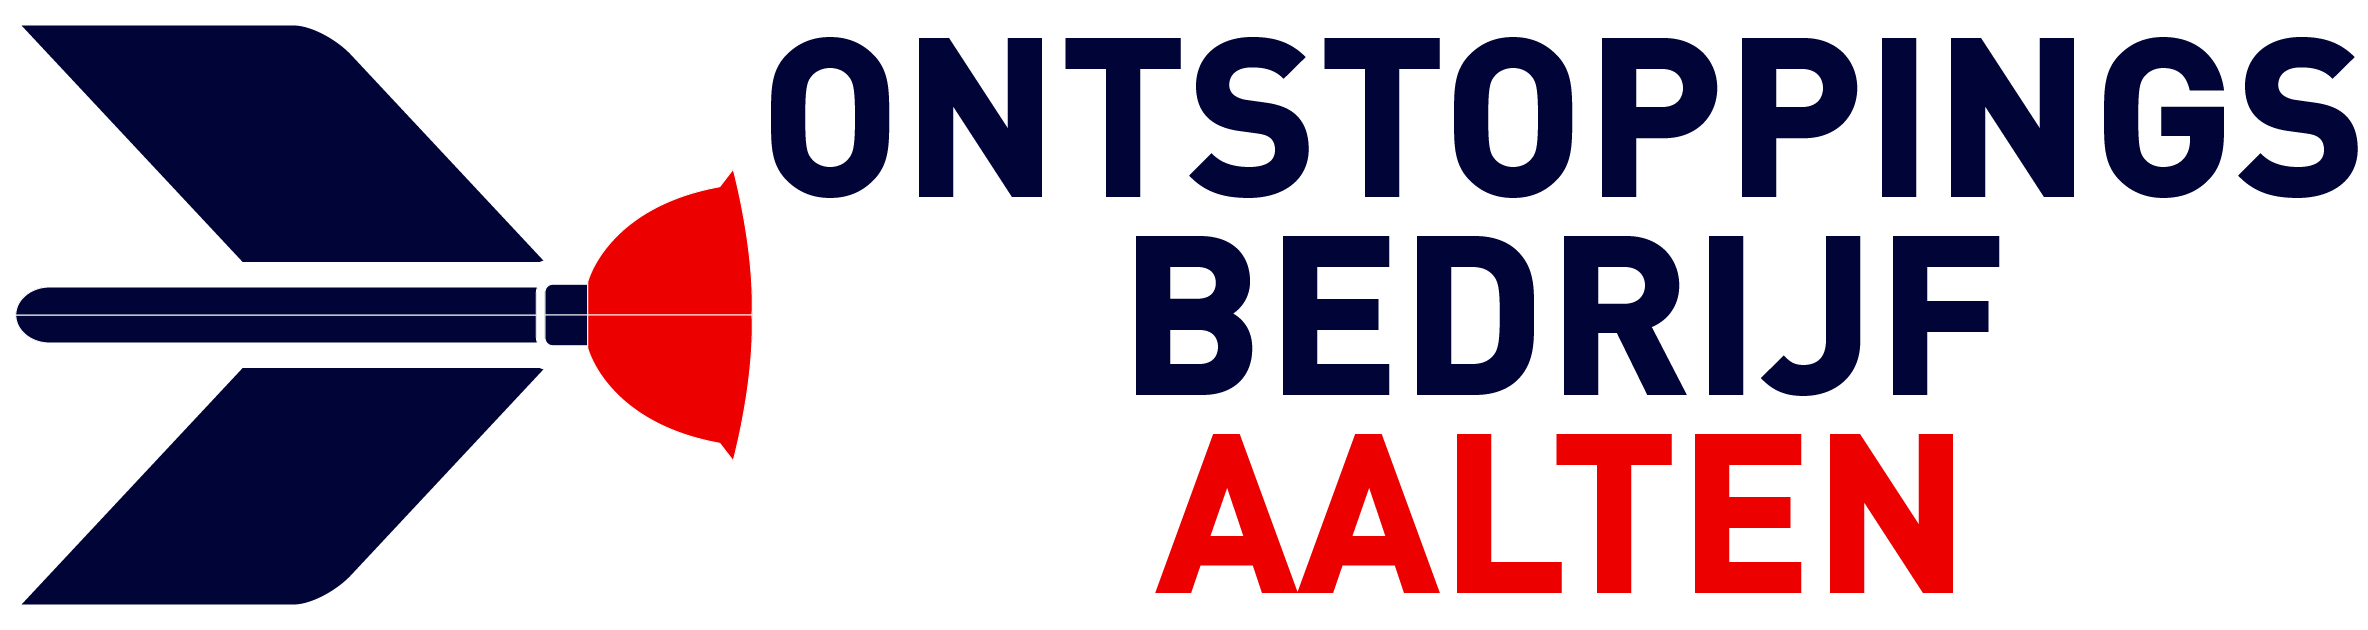 Ontstoppingsbedrijf Aalten logo